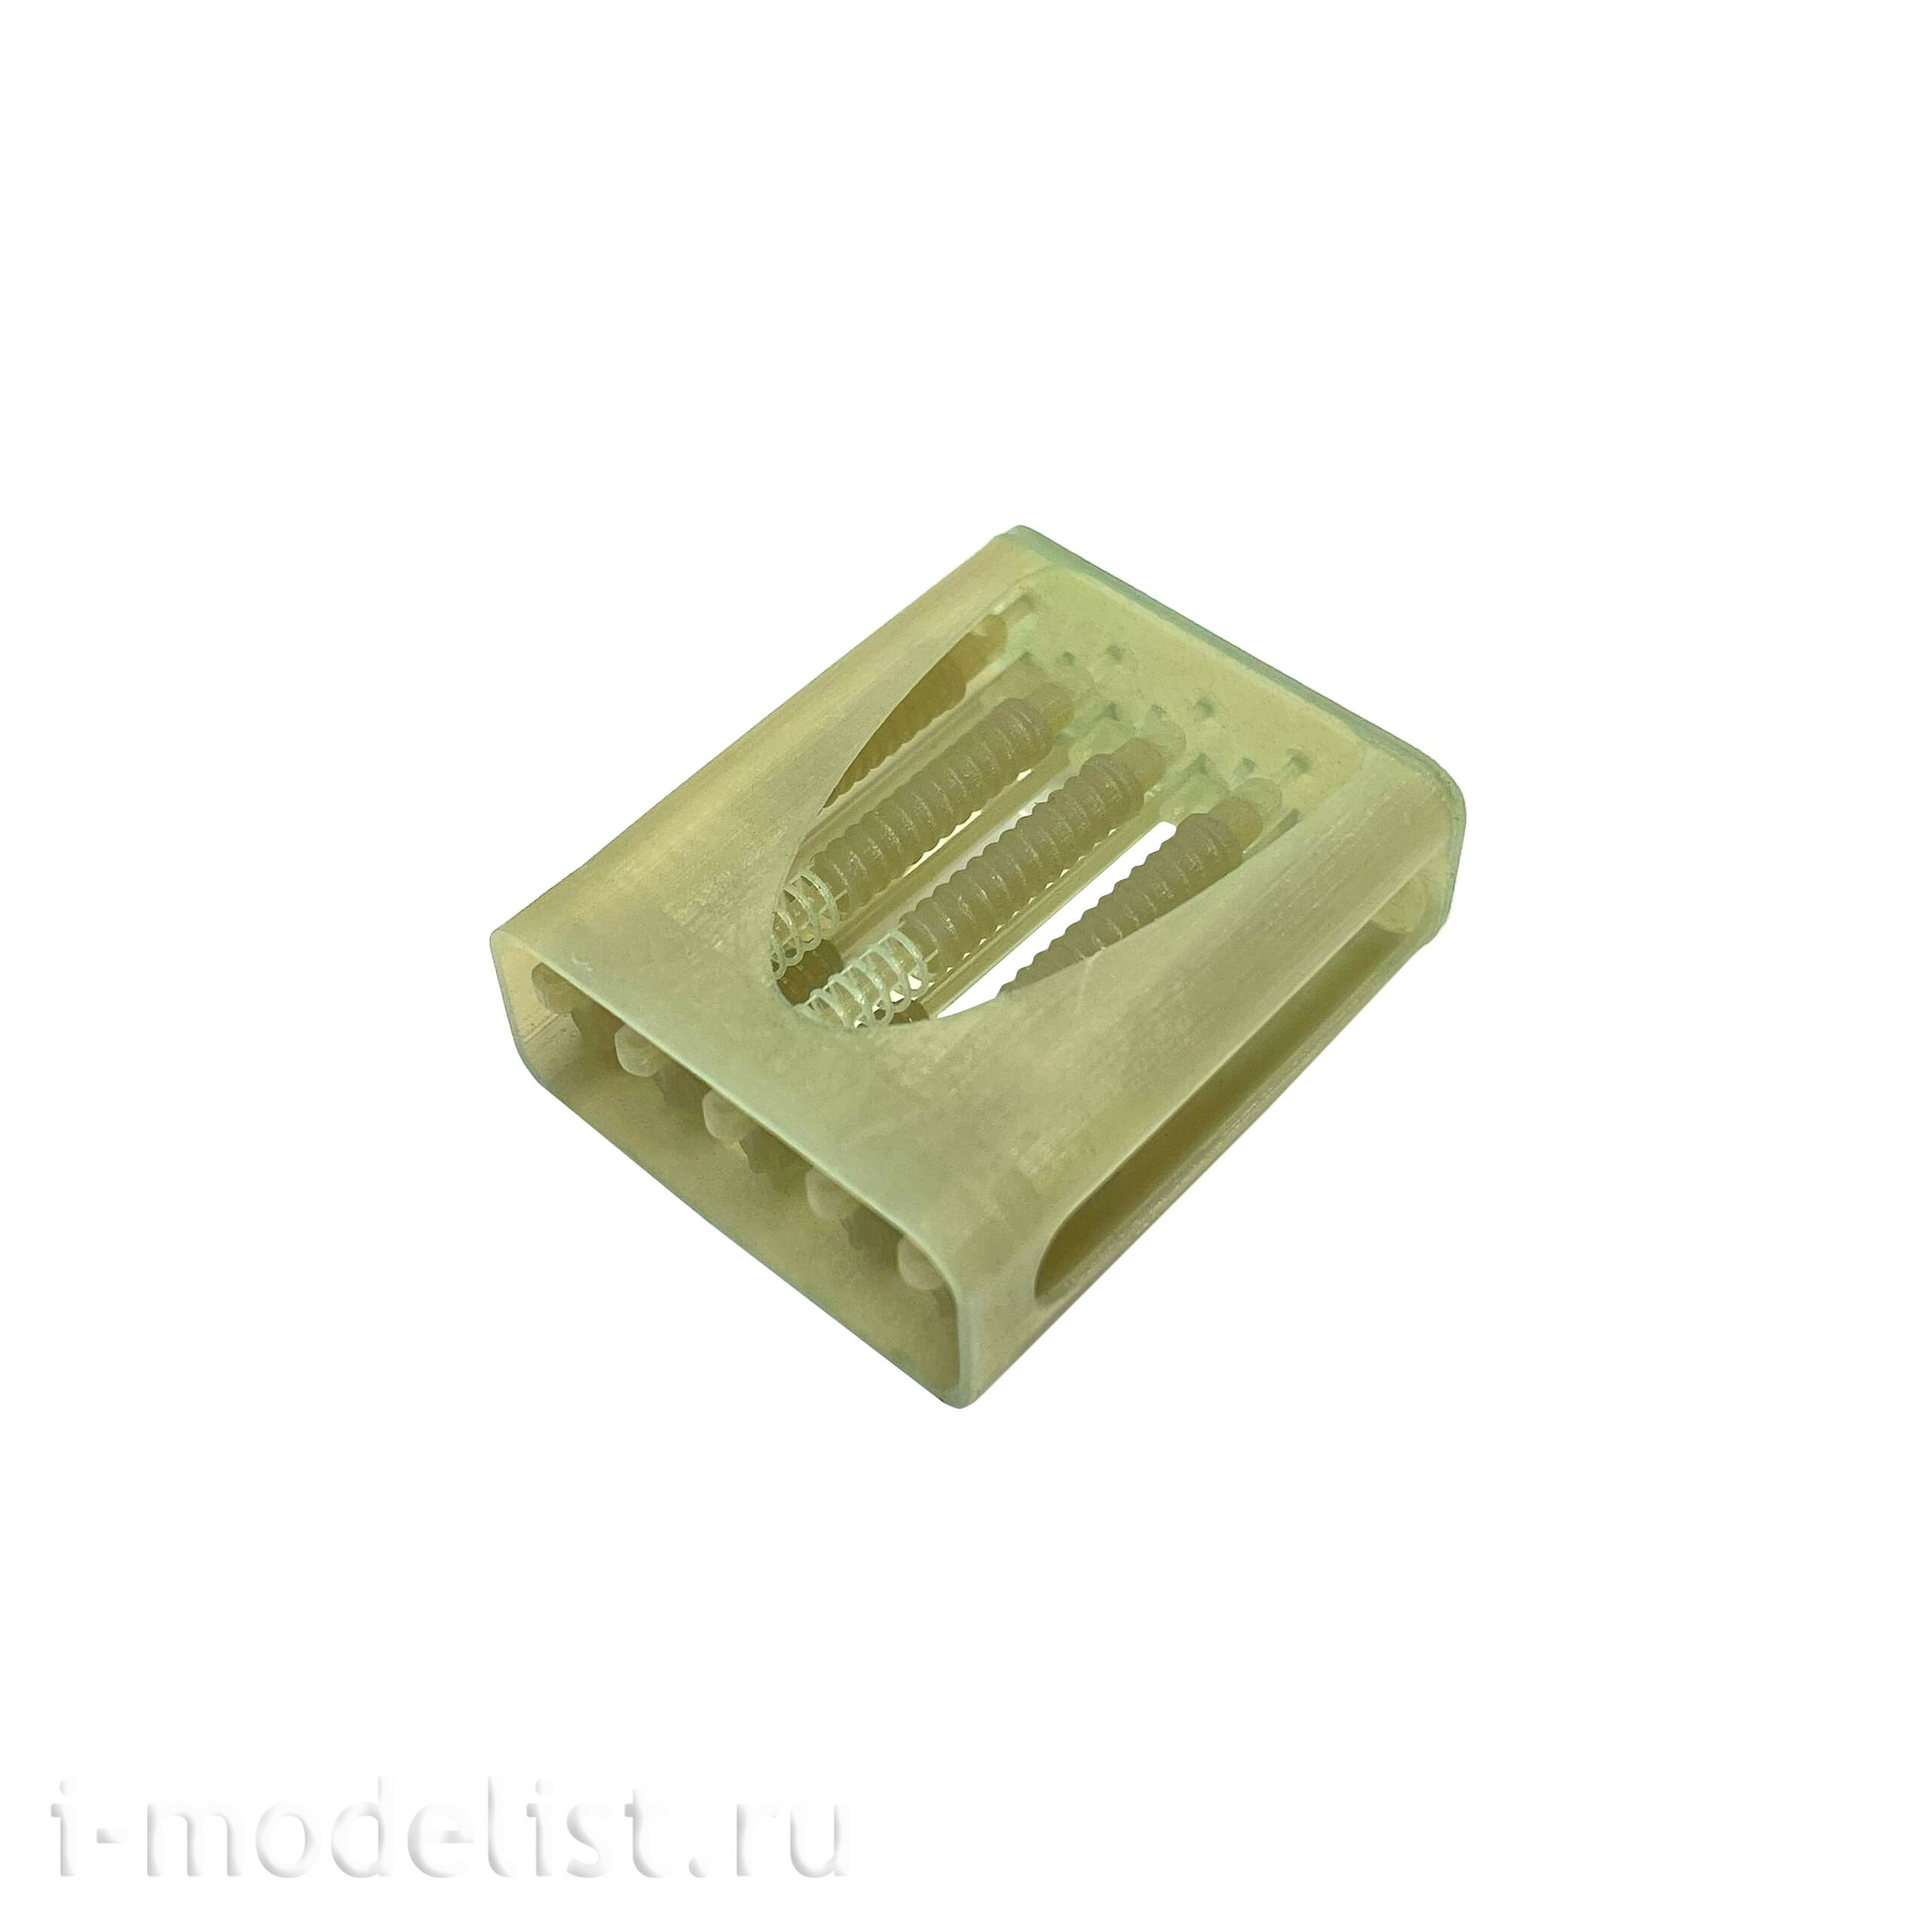 Im35110 Imodelist 1/35 Shock absorbers for the Zvezda model, art. 3657